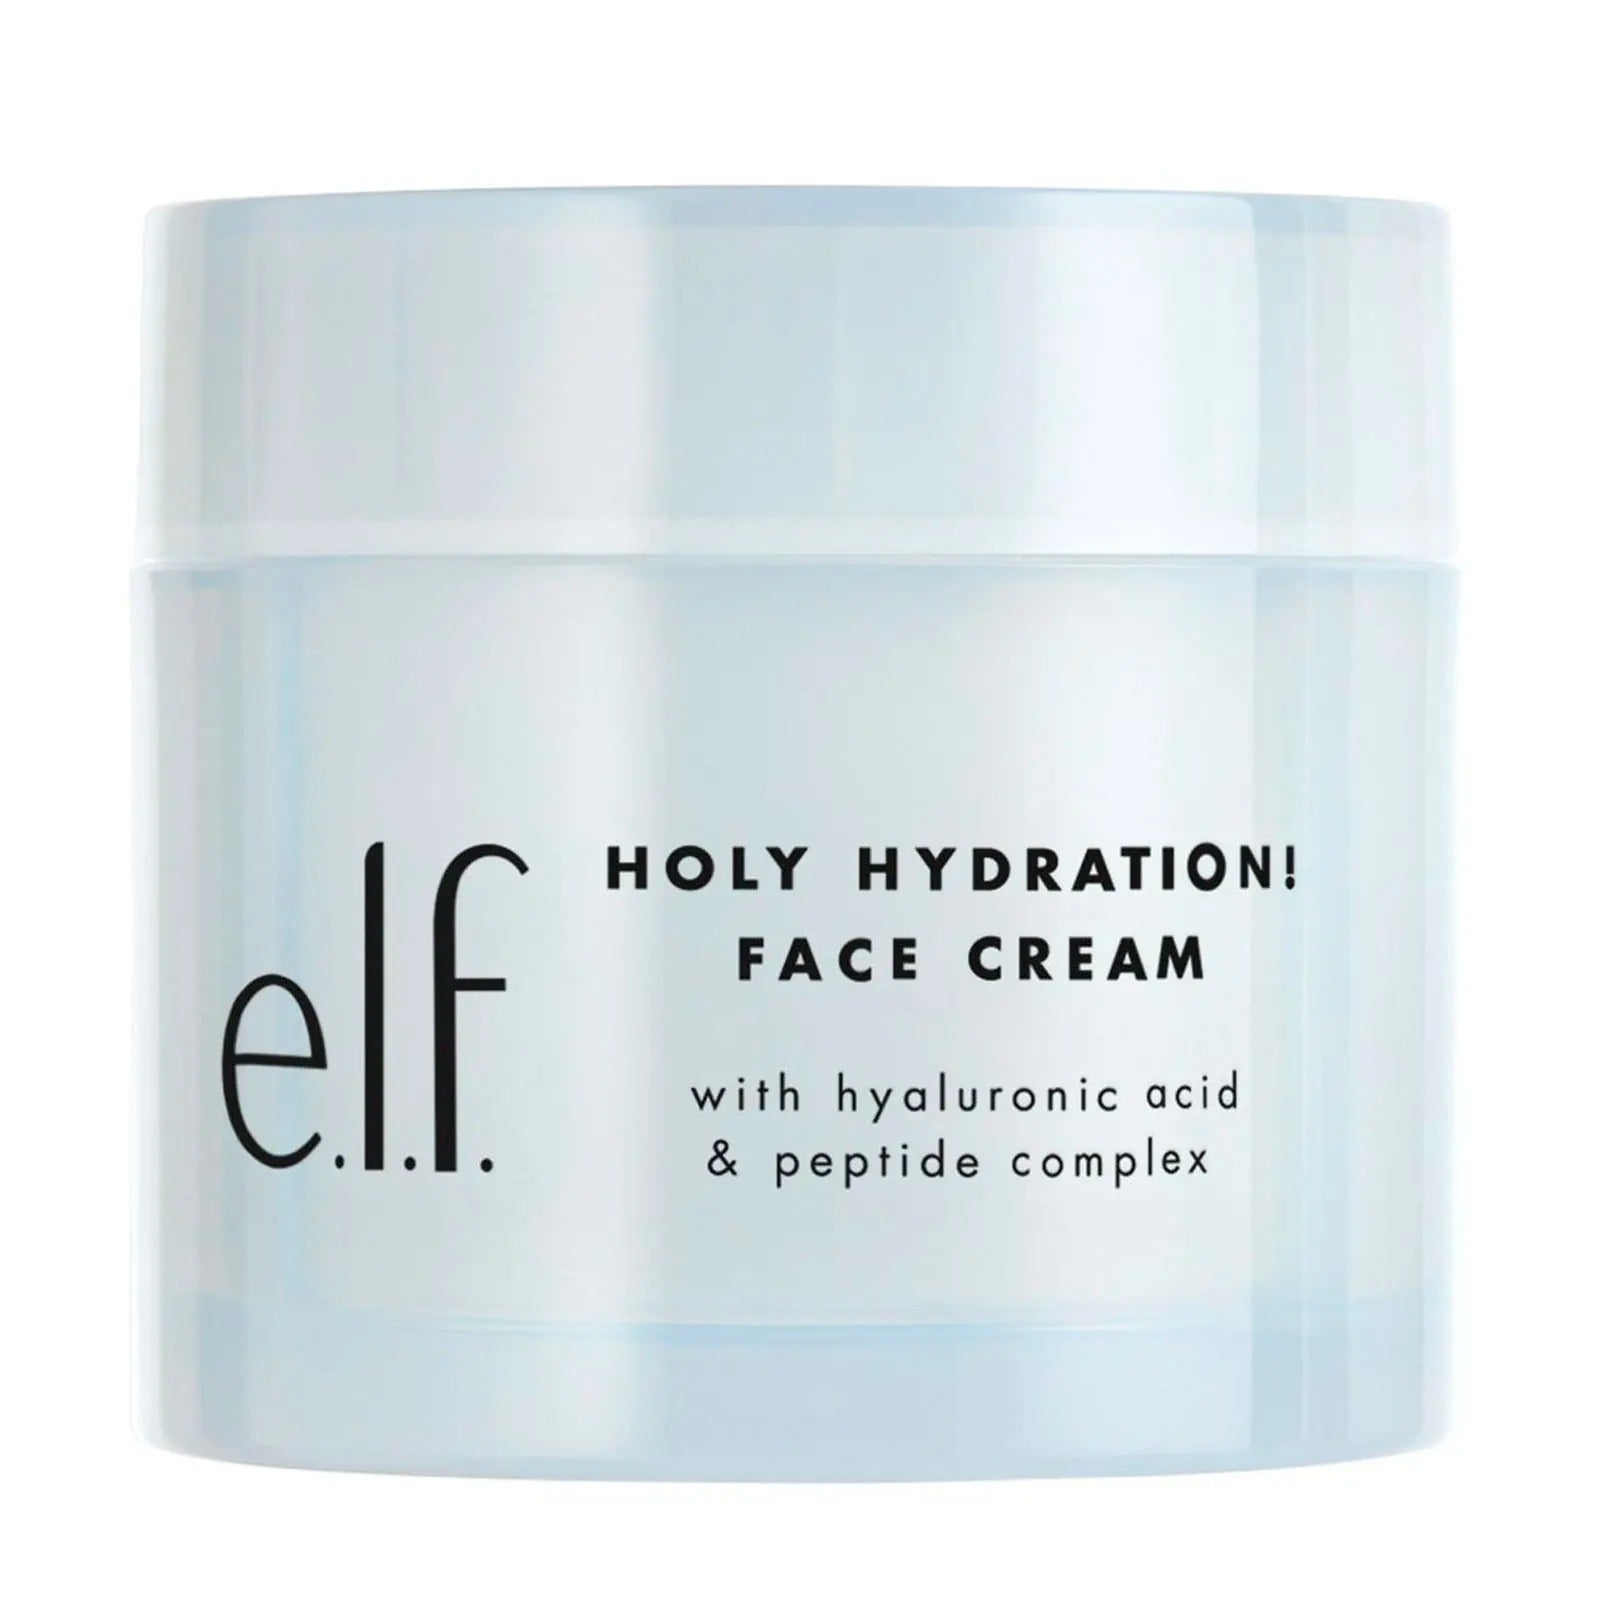 e.l.f. + Holy Hydration! Face Cream